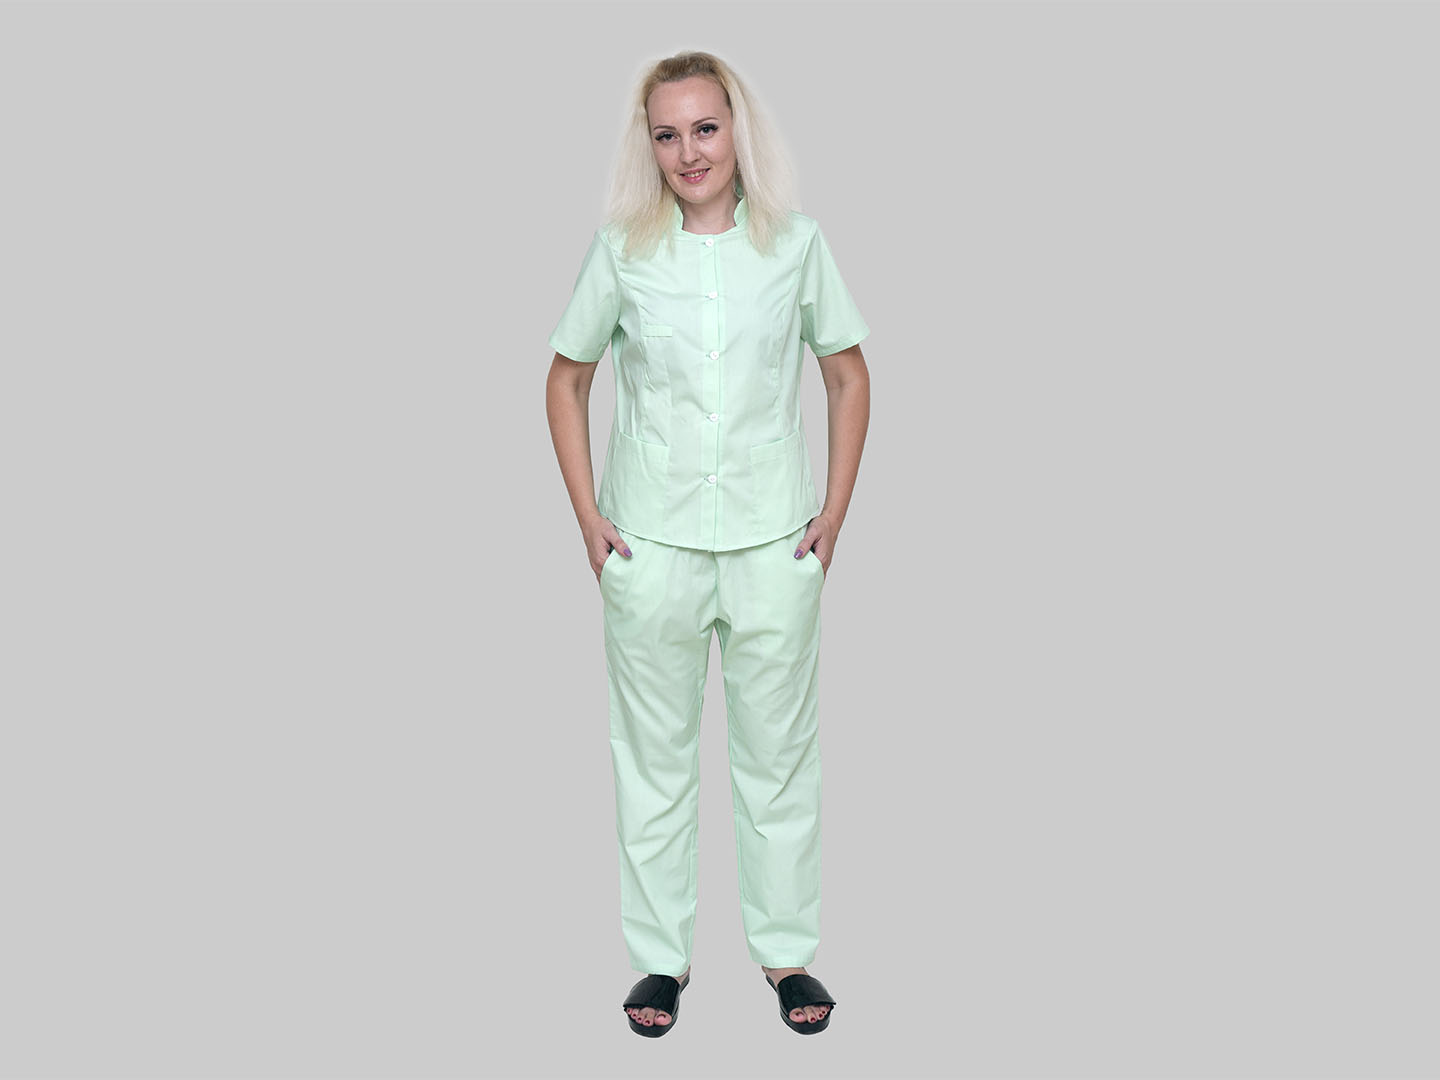 Женский костюм медицинский цвет олива КМ 003